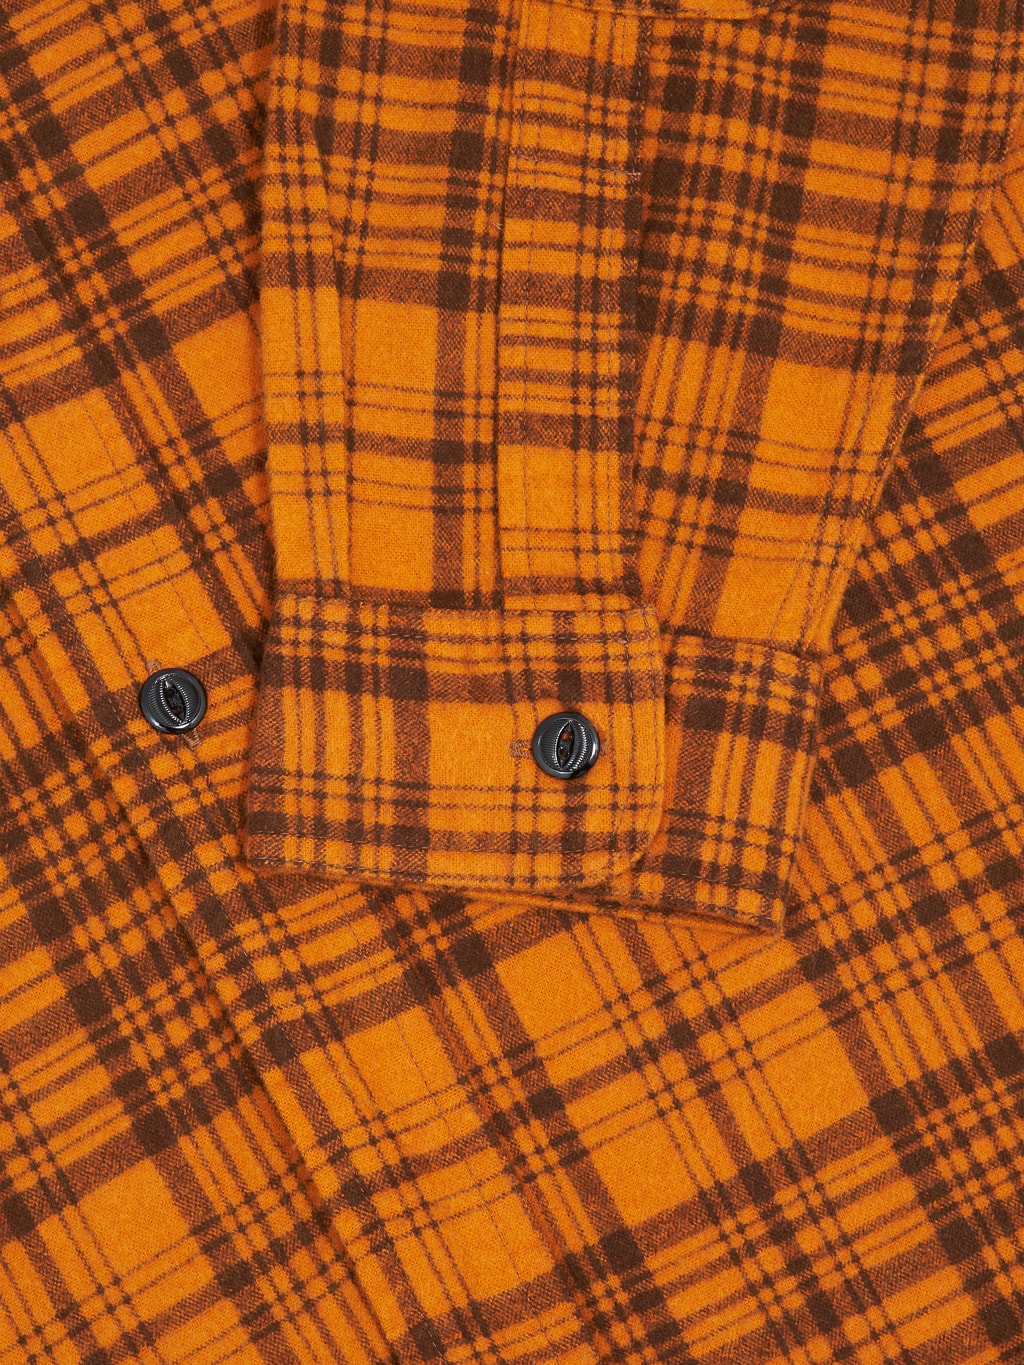 Trophy Clothing Machine Signal Check Shirt Orange cuff closeup